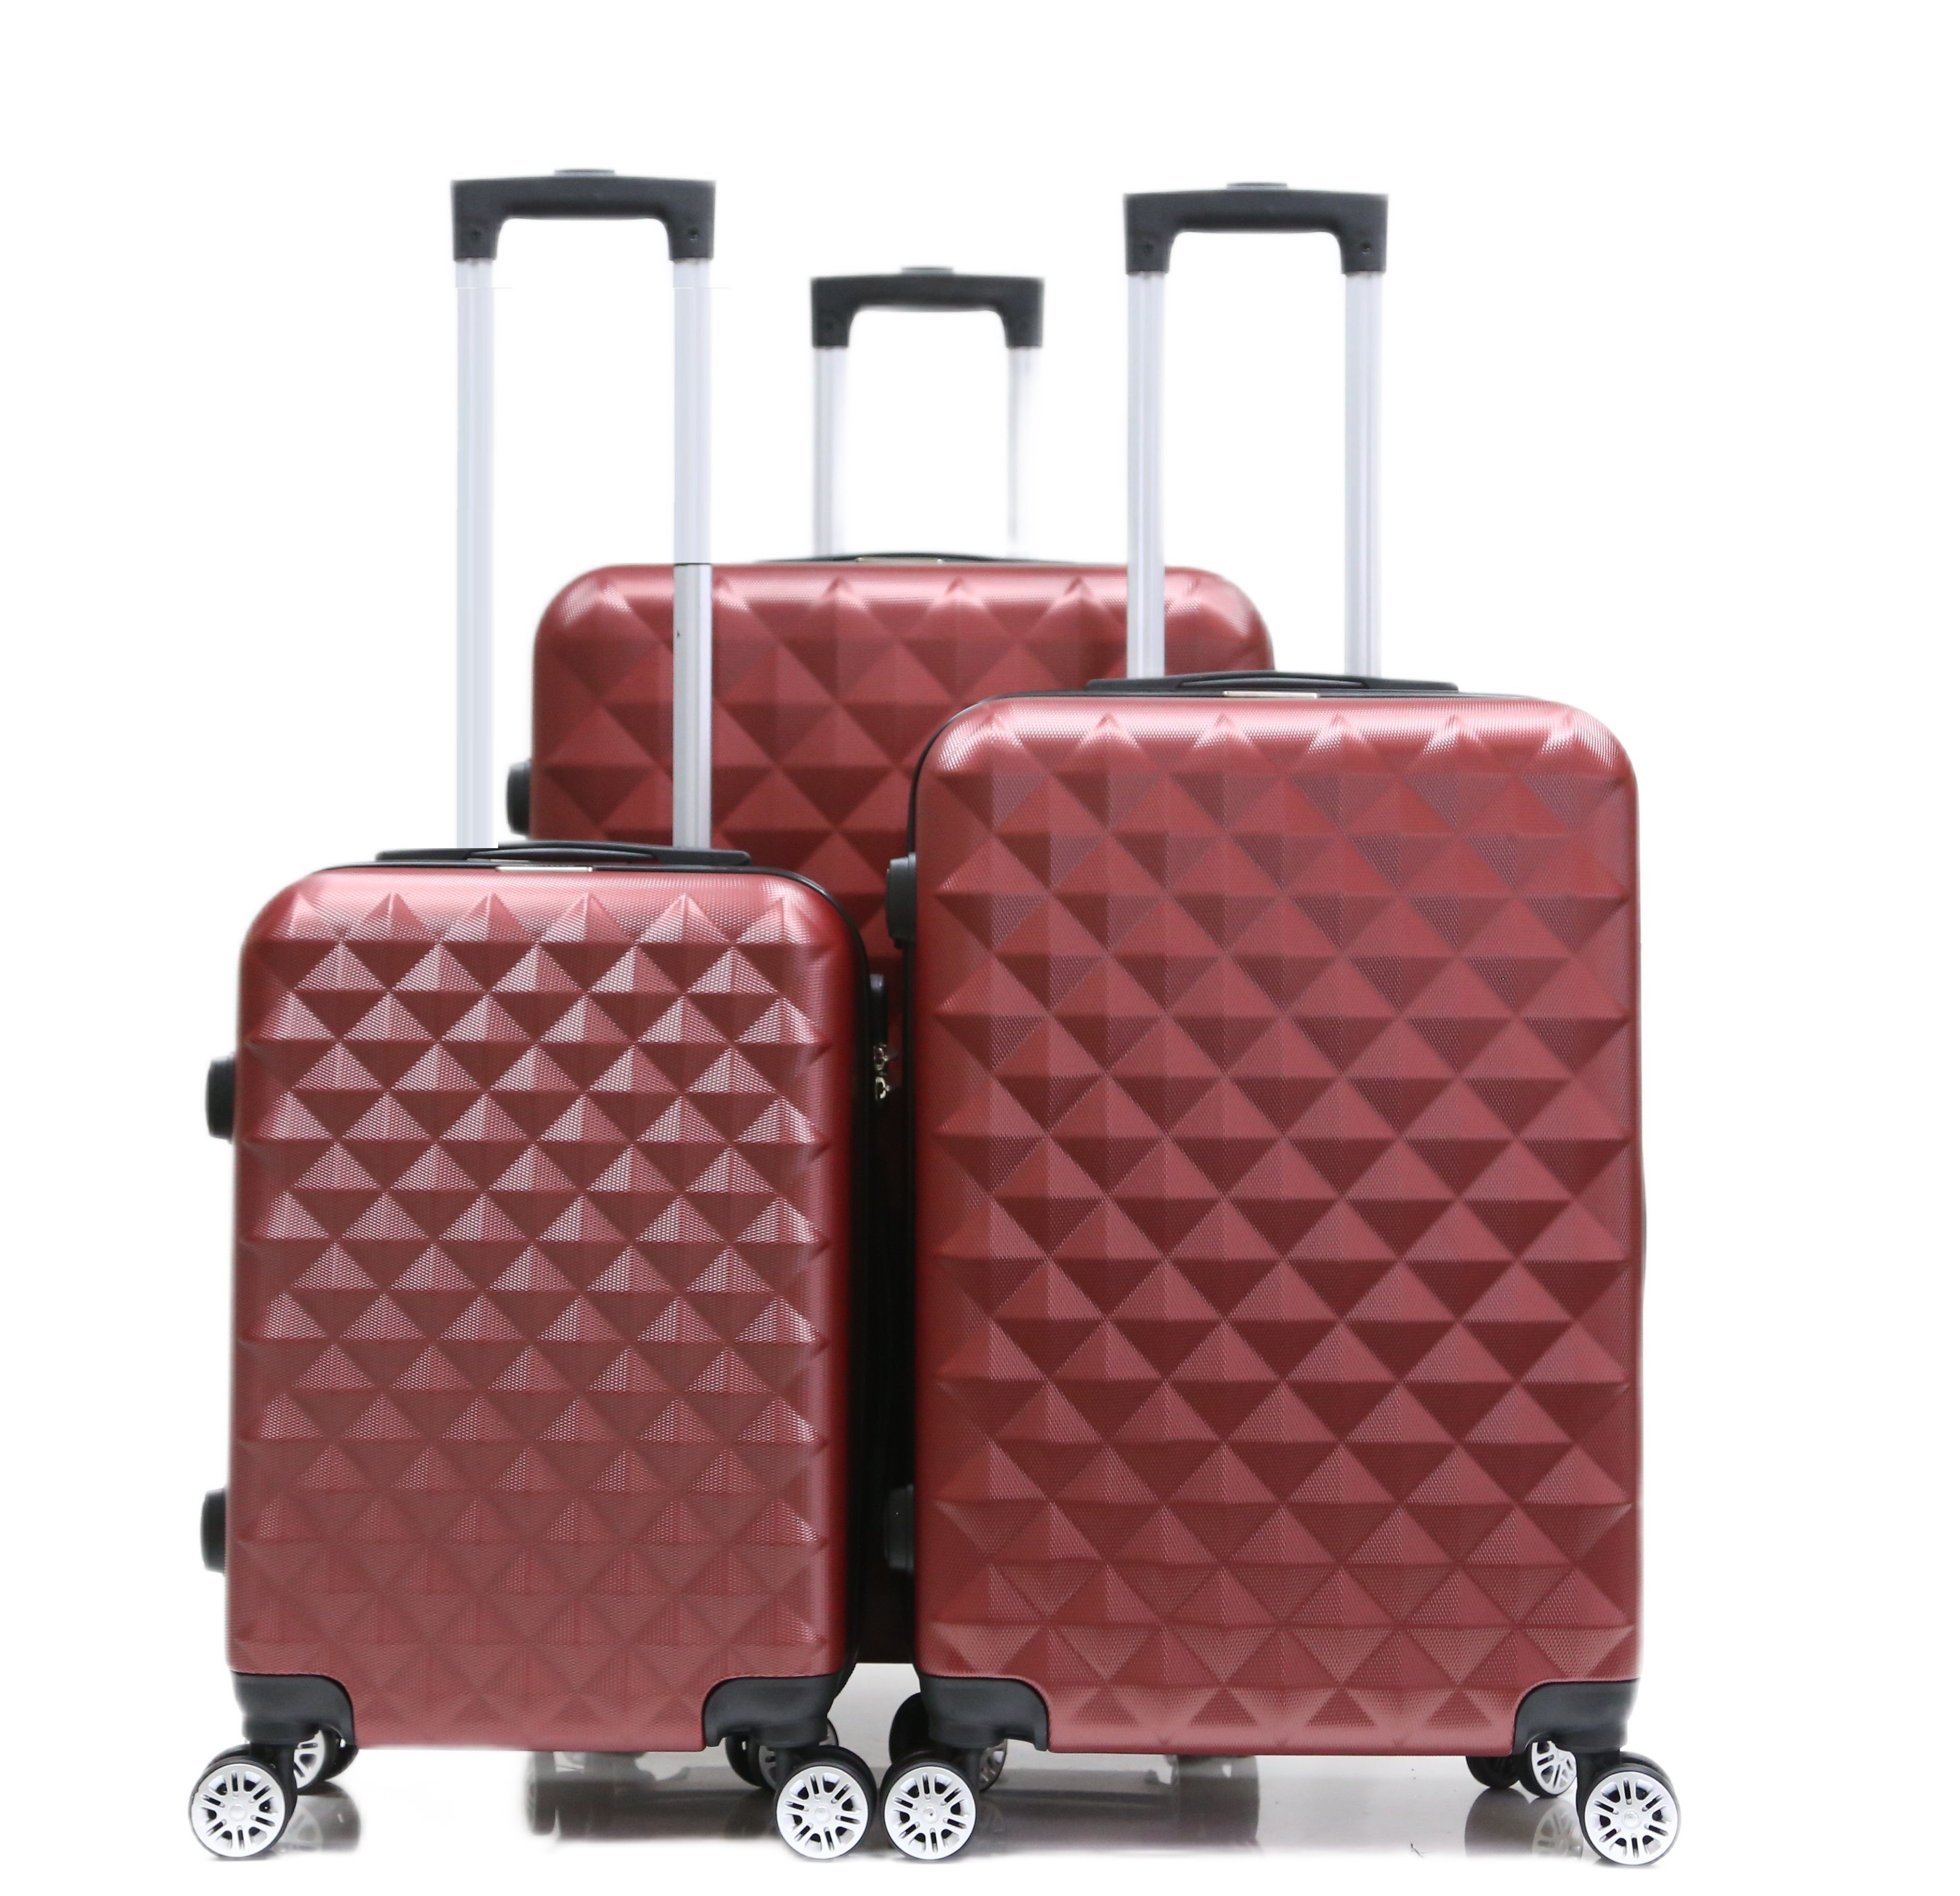 Cheffinger Koffer Koffer 3 tlg Hartschale Trolley Set Kofferset Handgepäck ABS-07, 4 Rollen Rot | Koffer